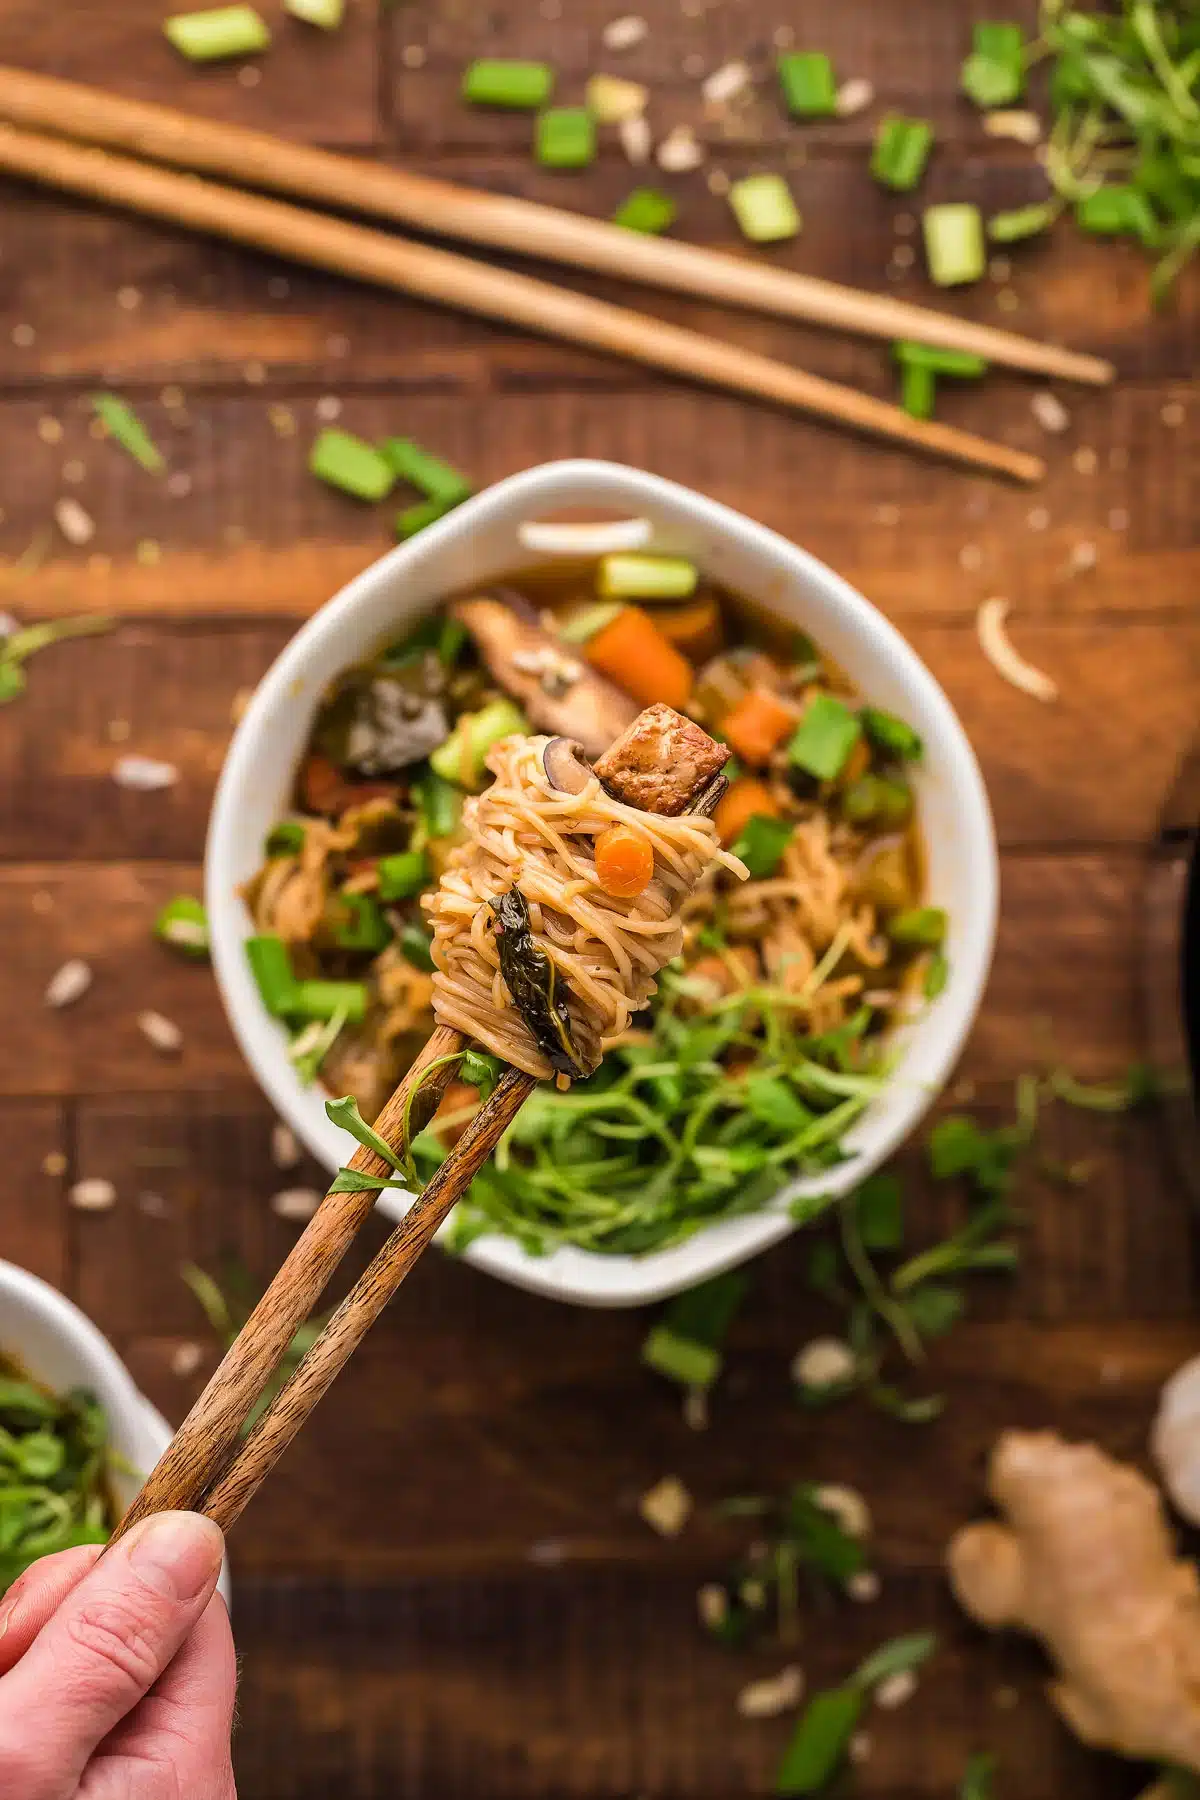 A person holding chopsticks over a bowl of vegan asian noodle soup.